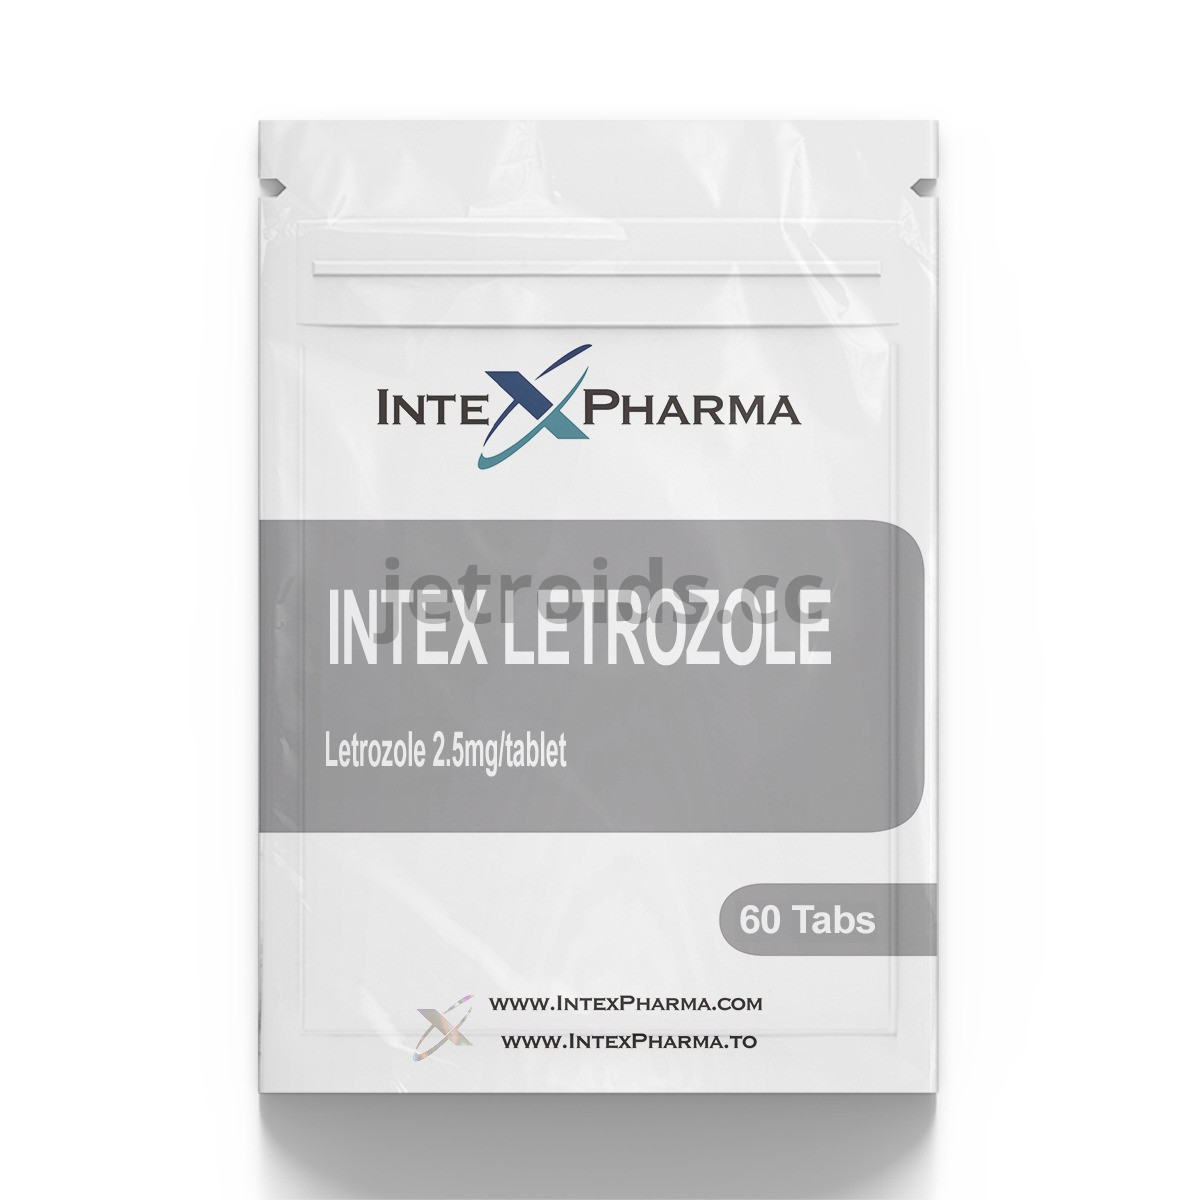 IntexPharma Intex Letrozole Product Info